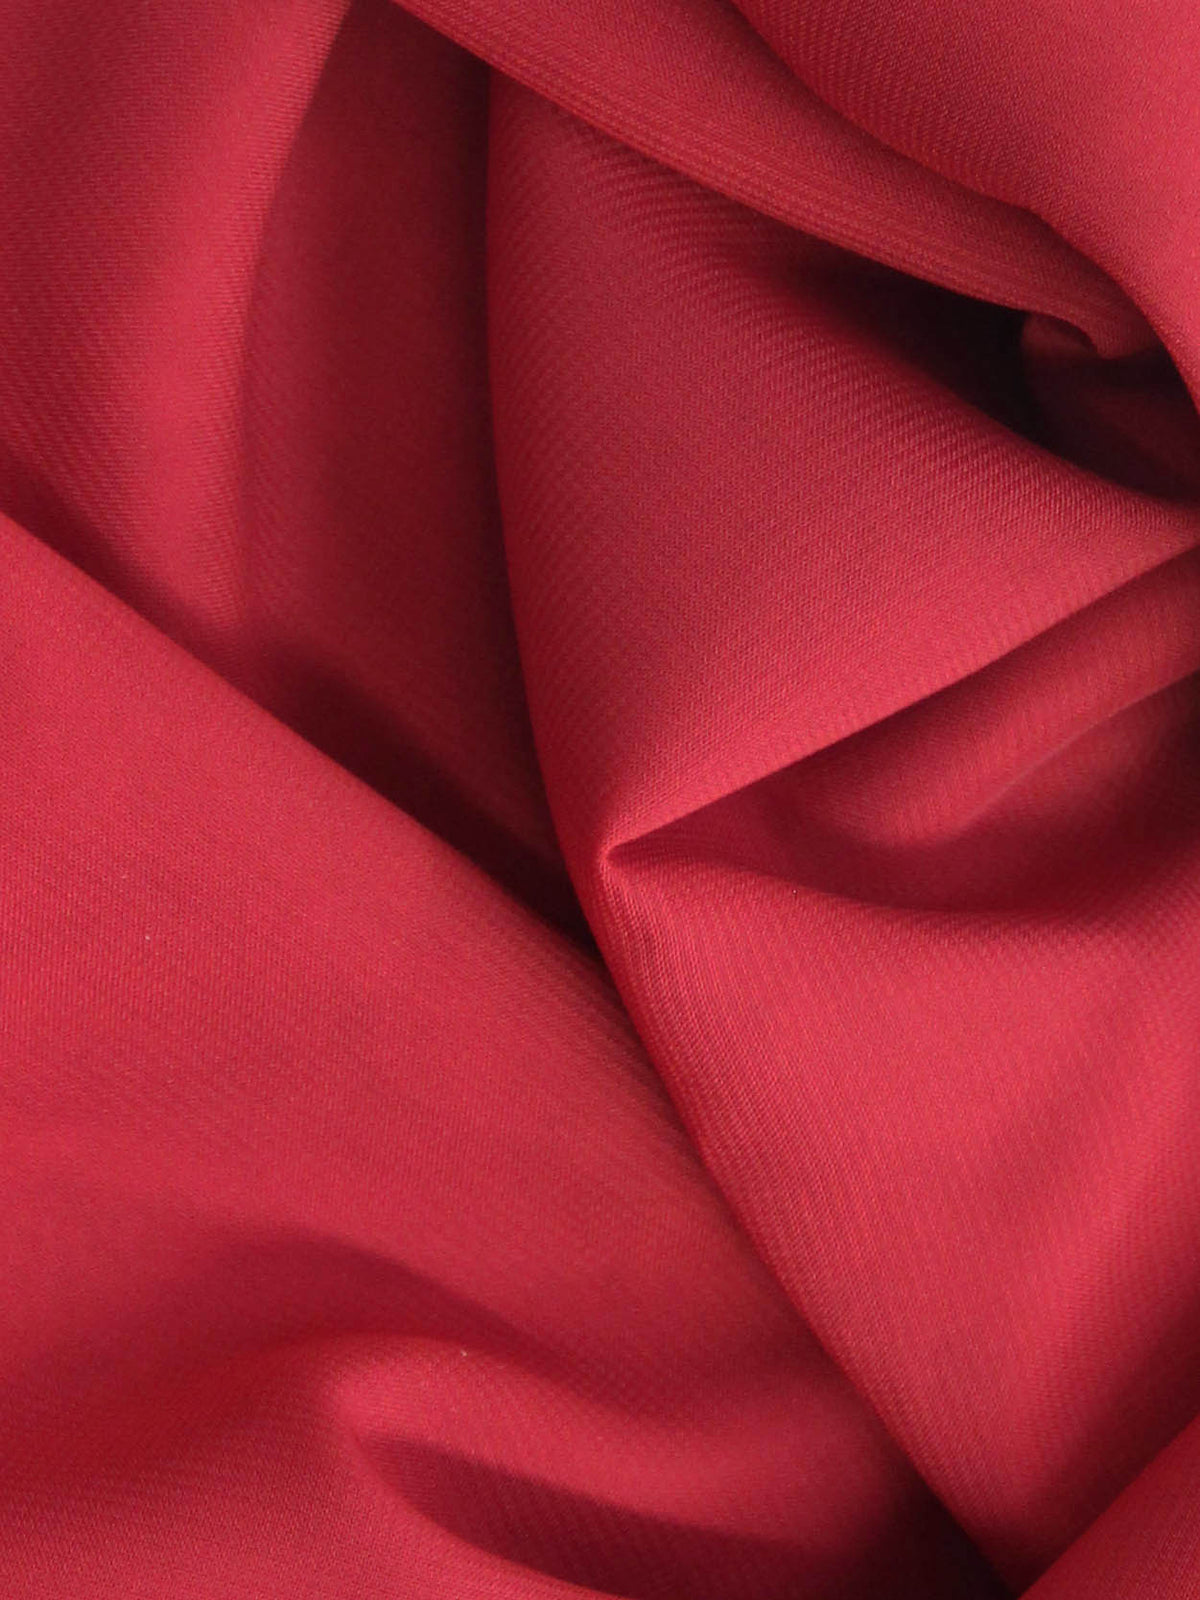 Red Polyester Chiffon - Benevolence